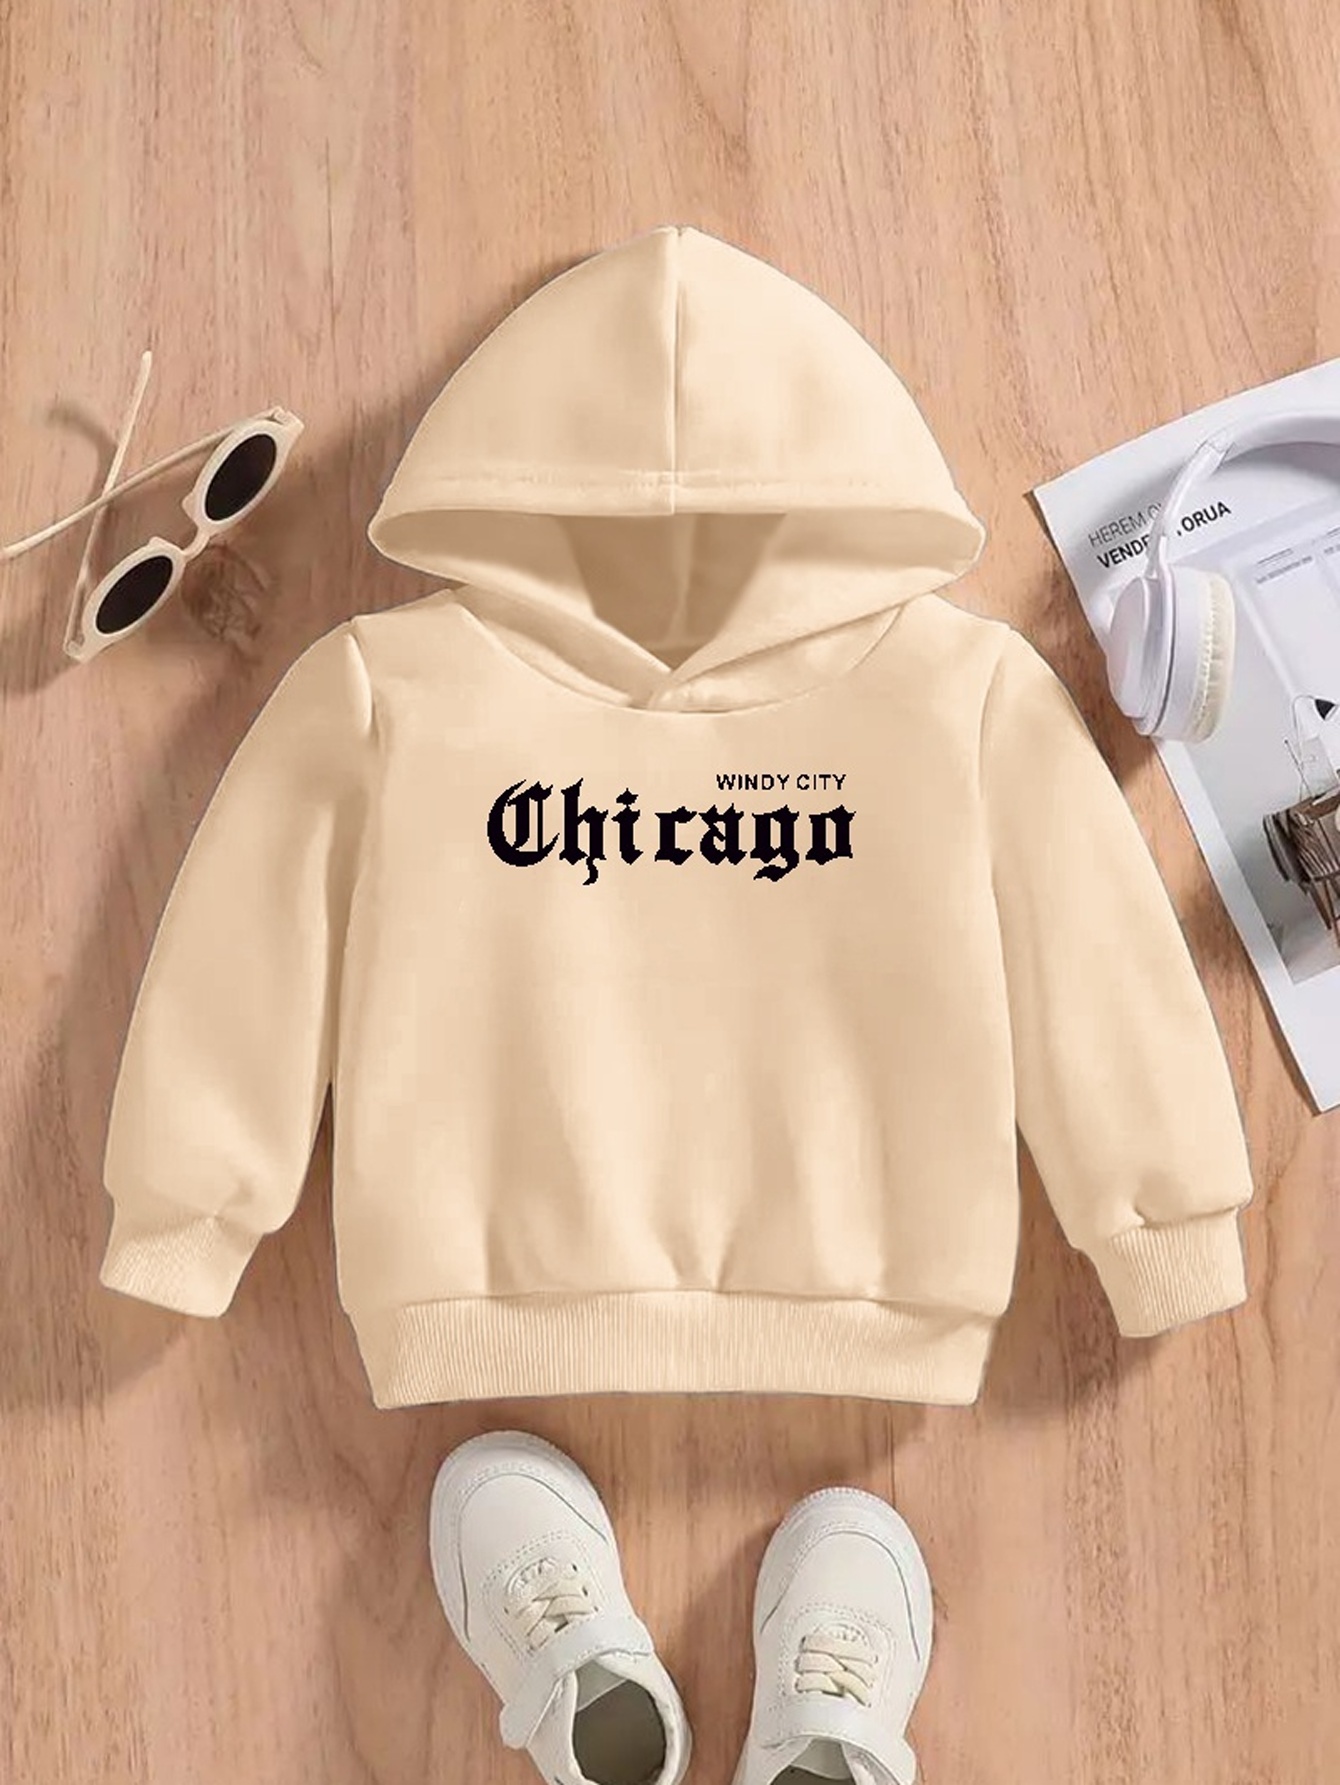 The Windy City Chicago  Chicago fashion, Fashion, Autumn winter fashion